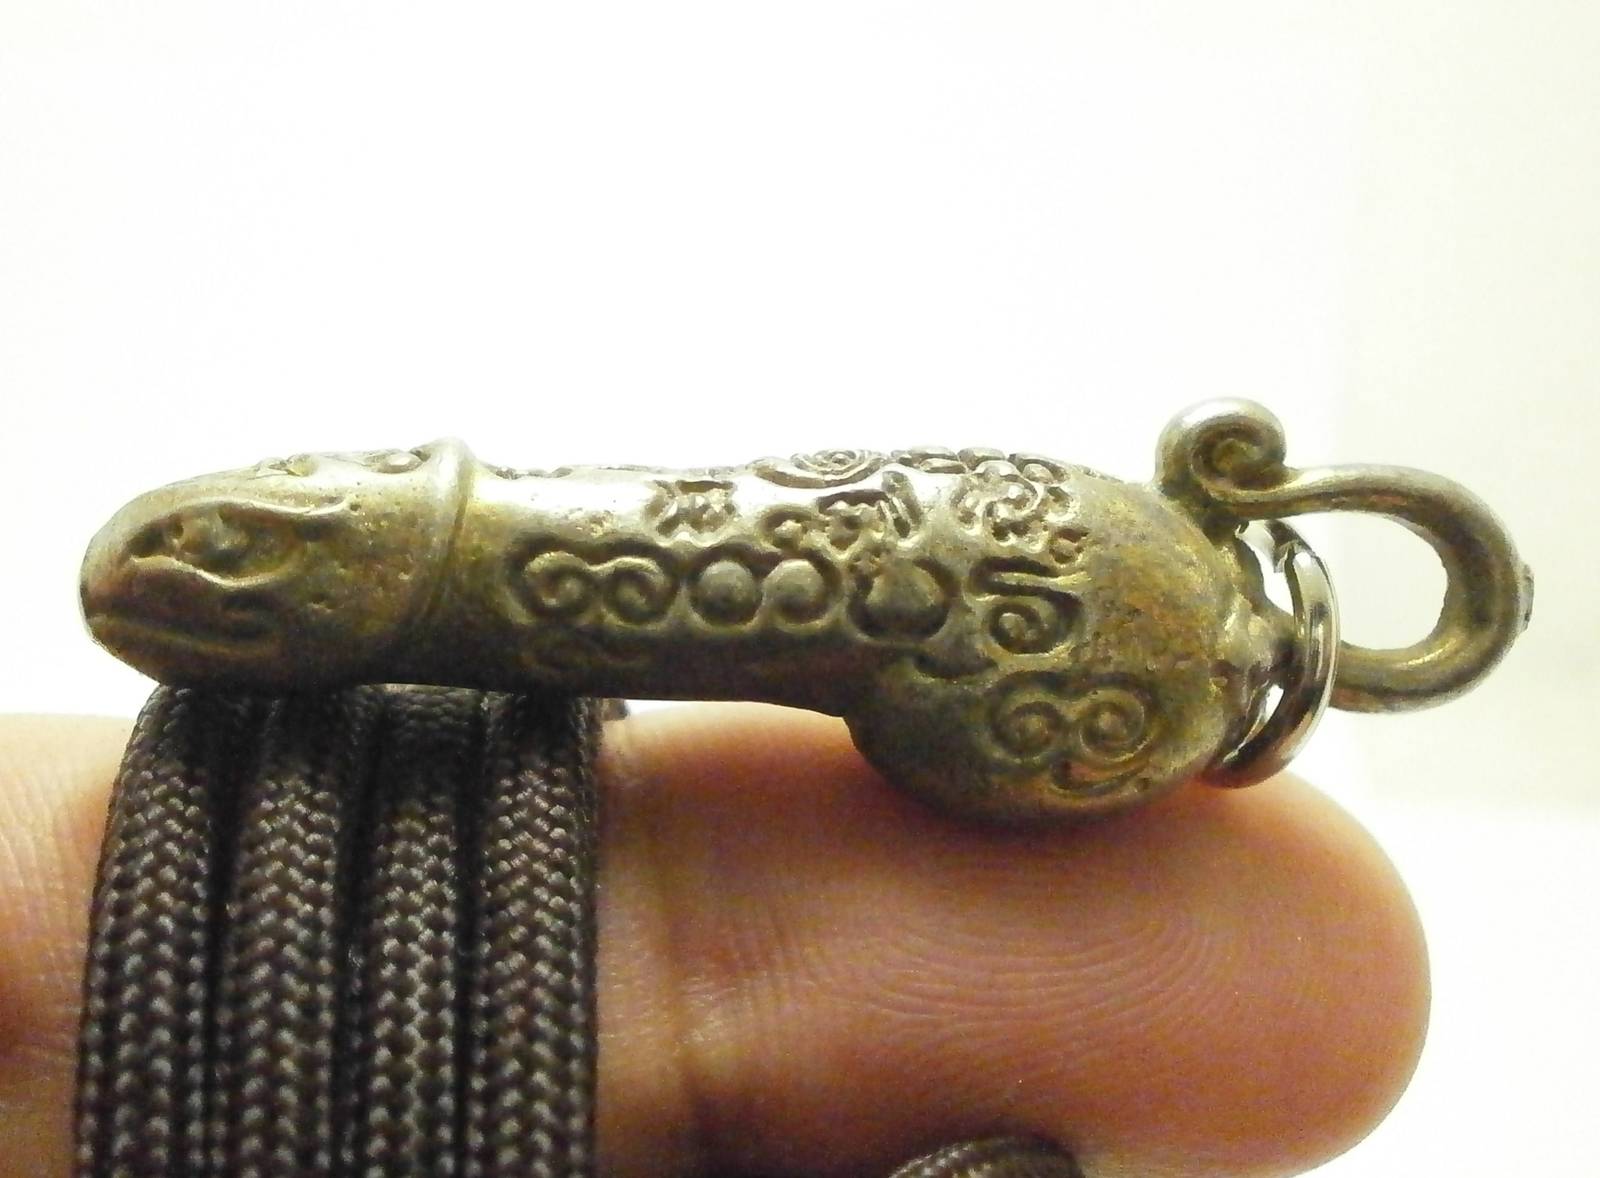 Primary image for Phallic Penis Lingham magic Yant amulet pendant necklace lingam good luck wealth